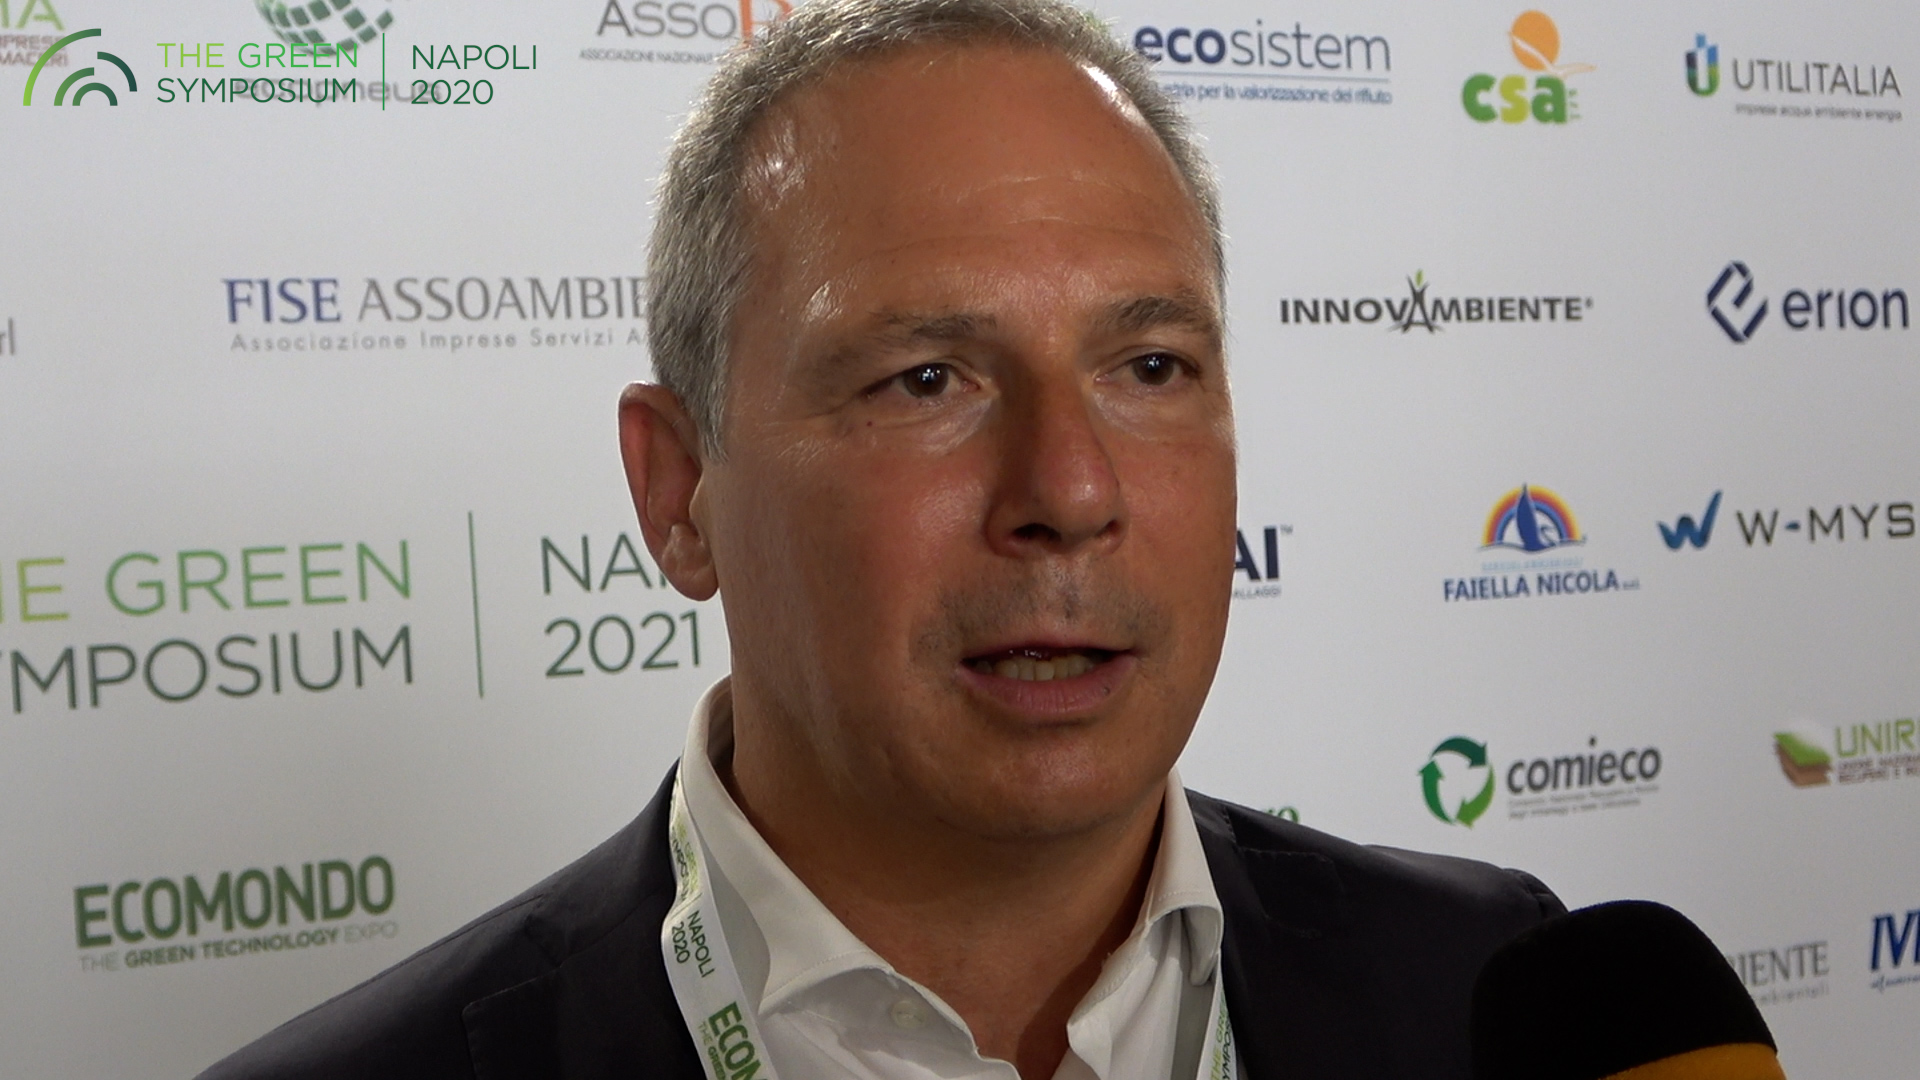 Green Symposium 2021: intervista a Giovanni Vivarelli - Presidente Acea Ambiente